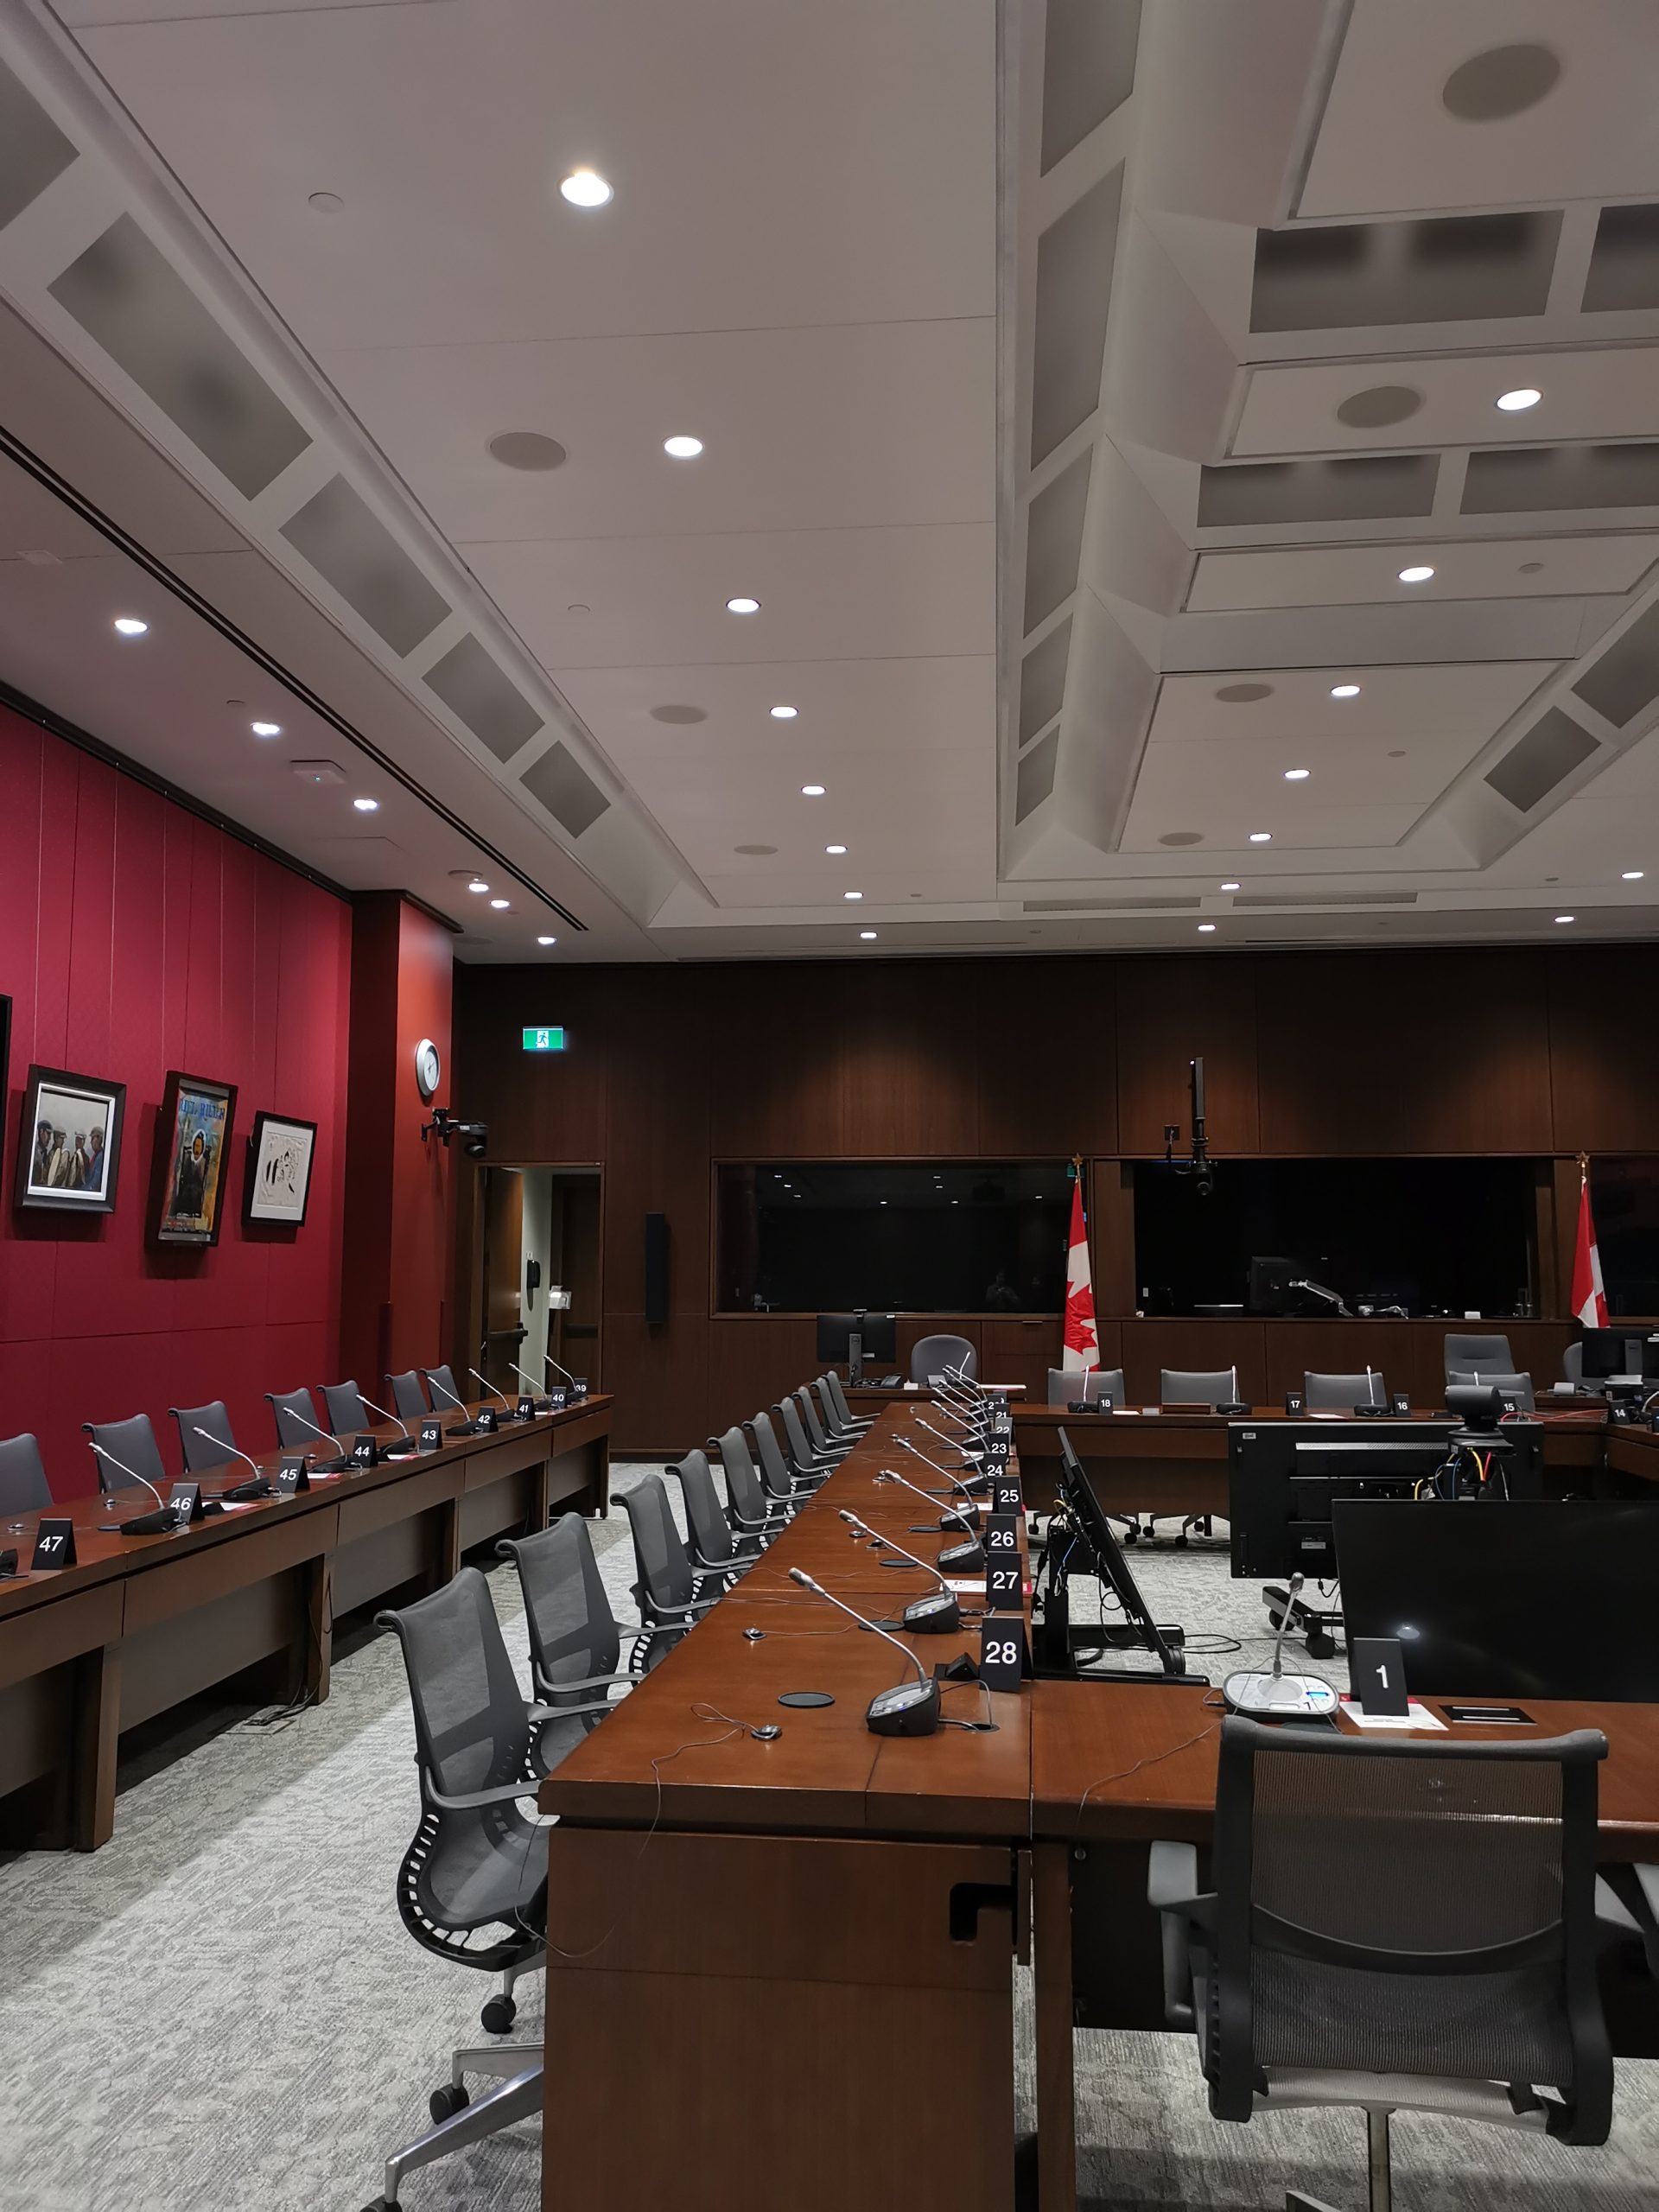 Senate of Canada, Ottawa, Ontario